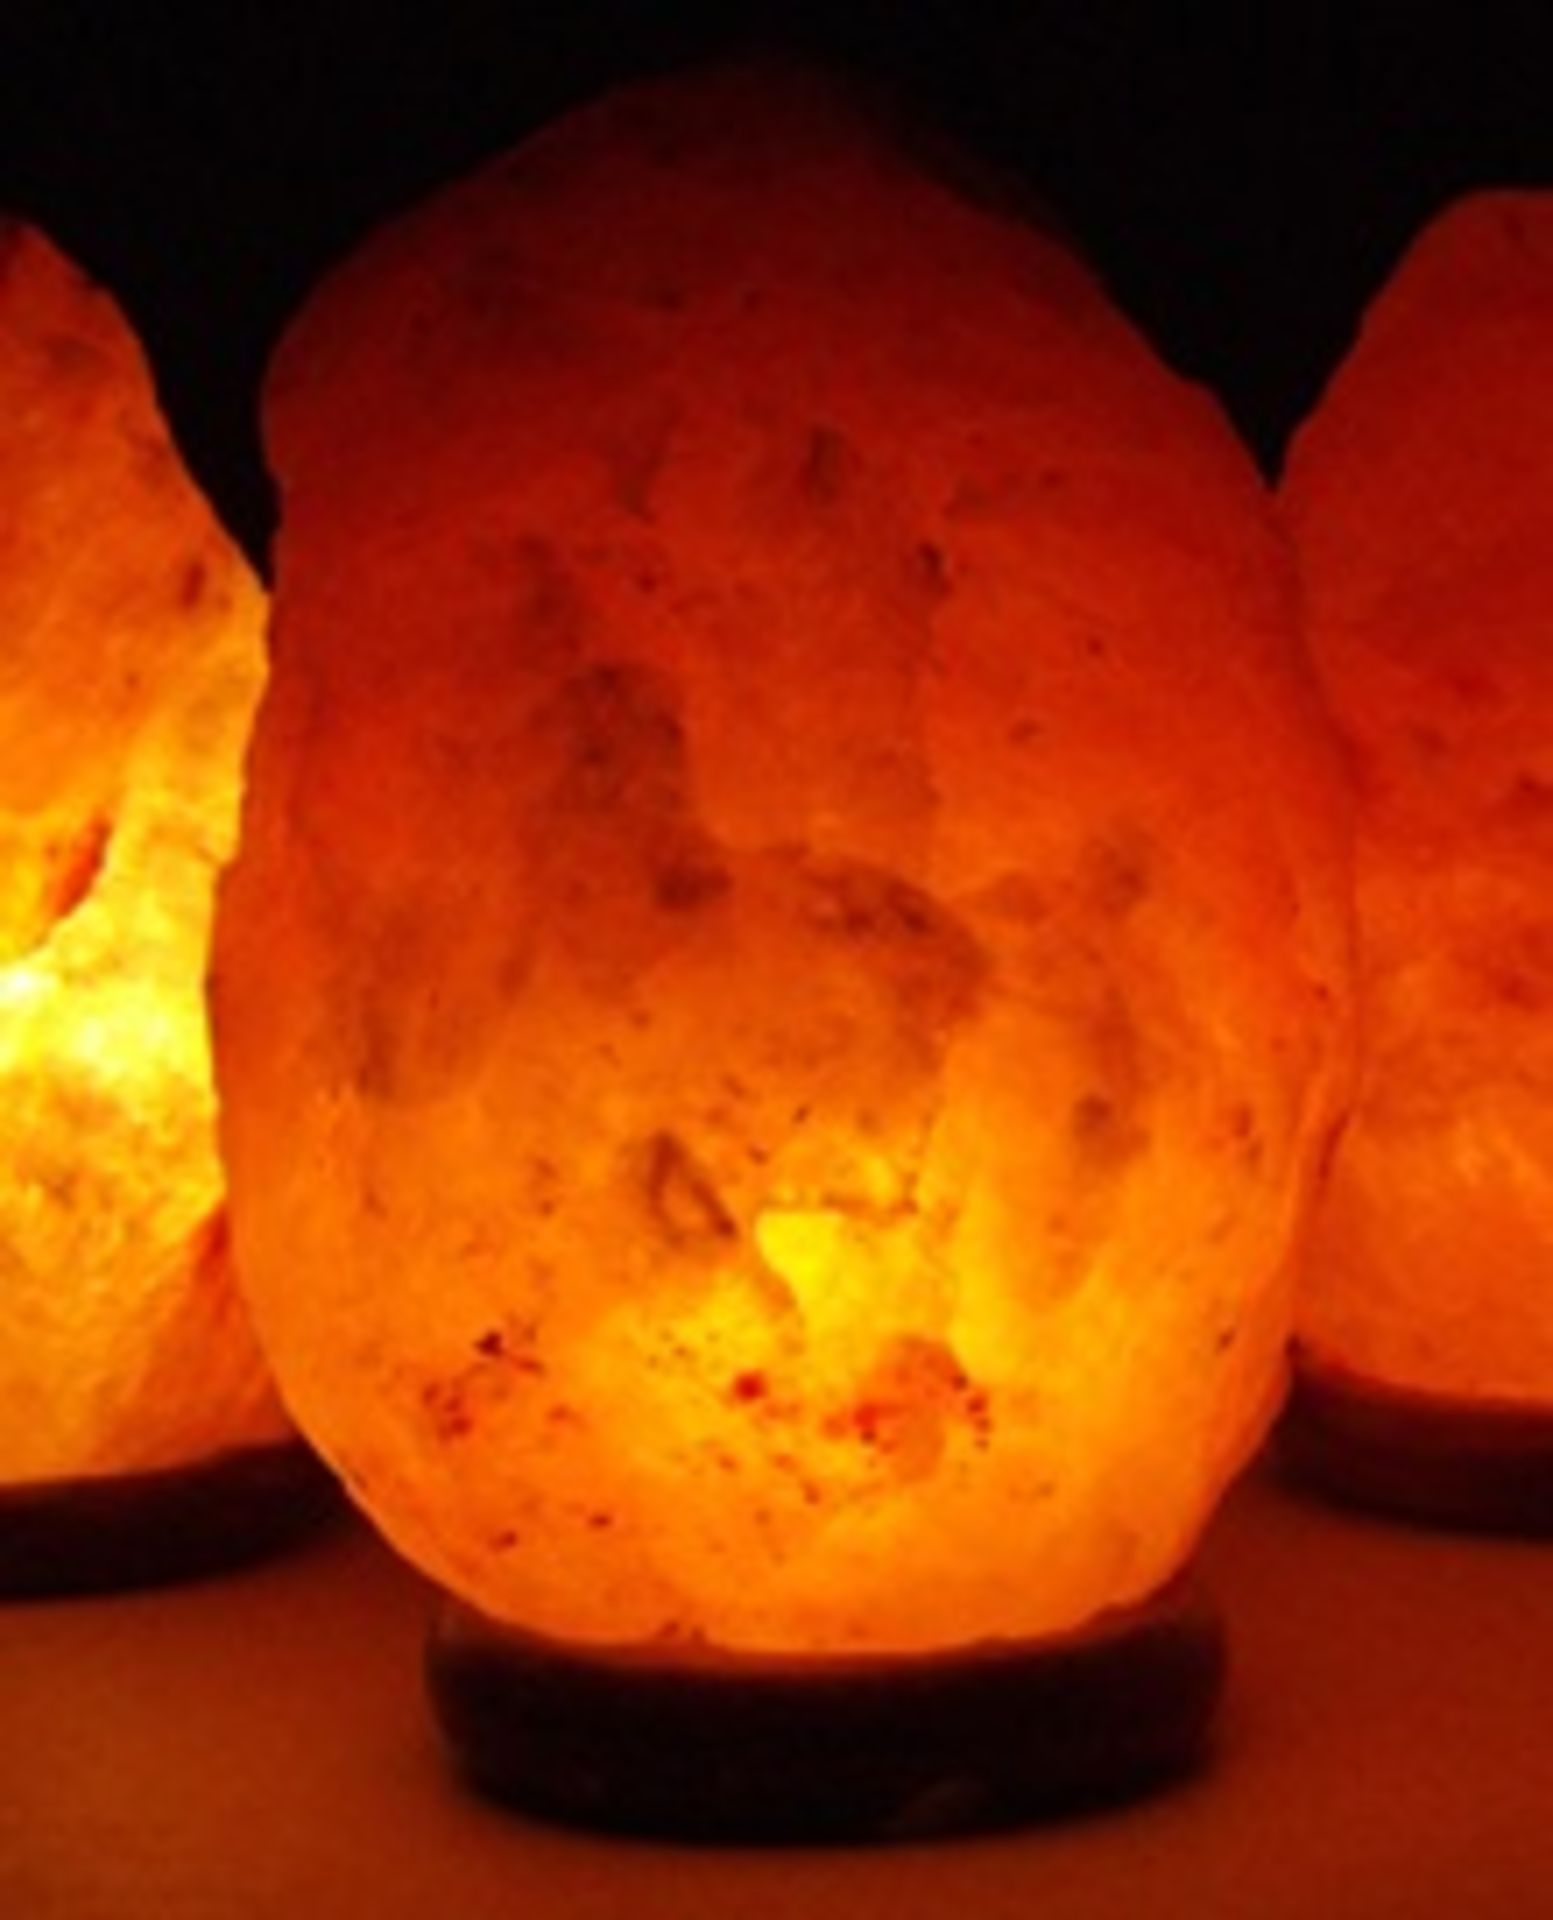 1 x Natural Himalayan Crystal Salt Lamp - Natural Therapeutic Ionizing Healing Lamp - 2-3KG - Approx